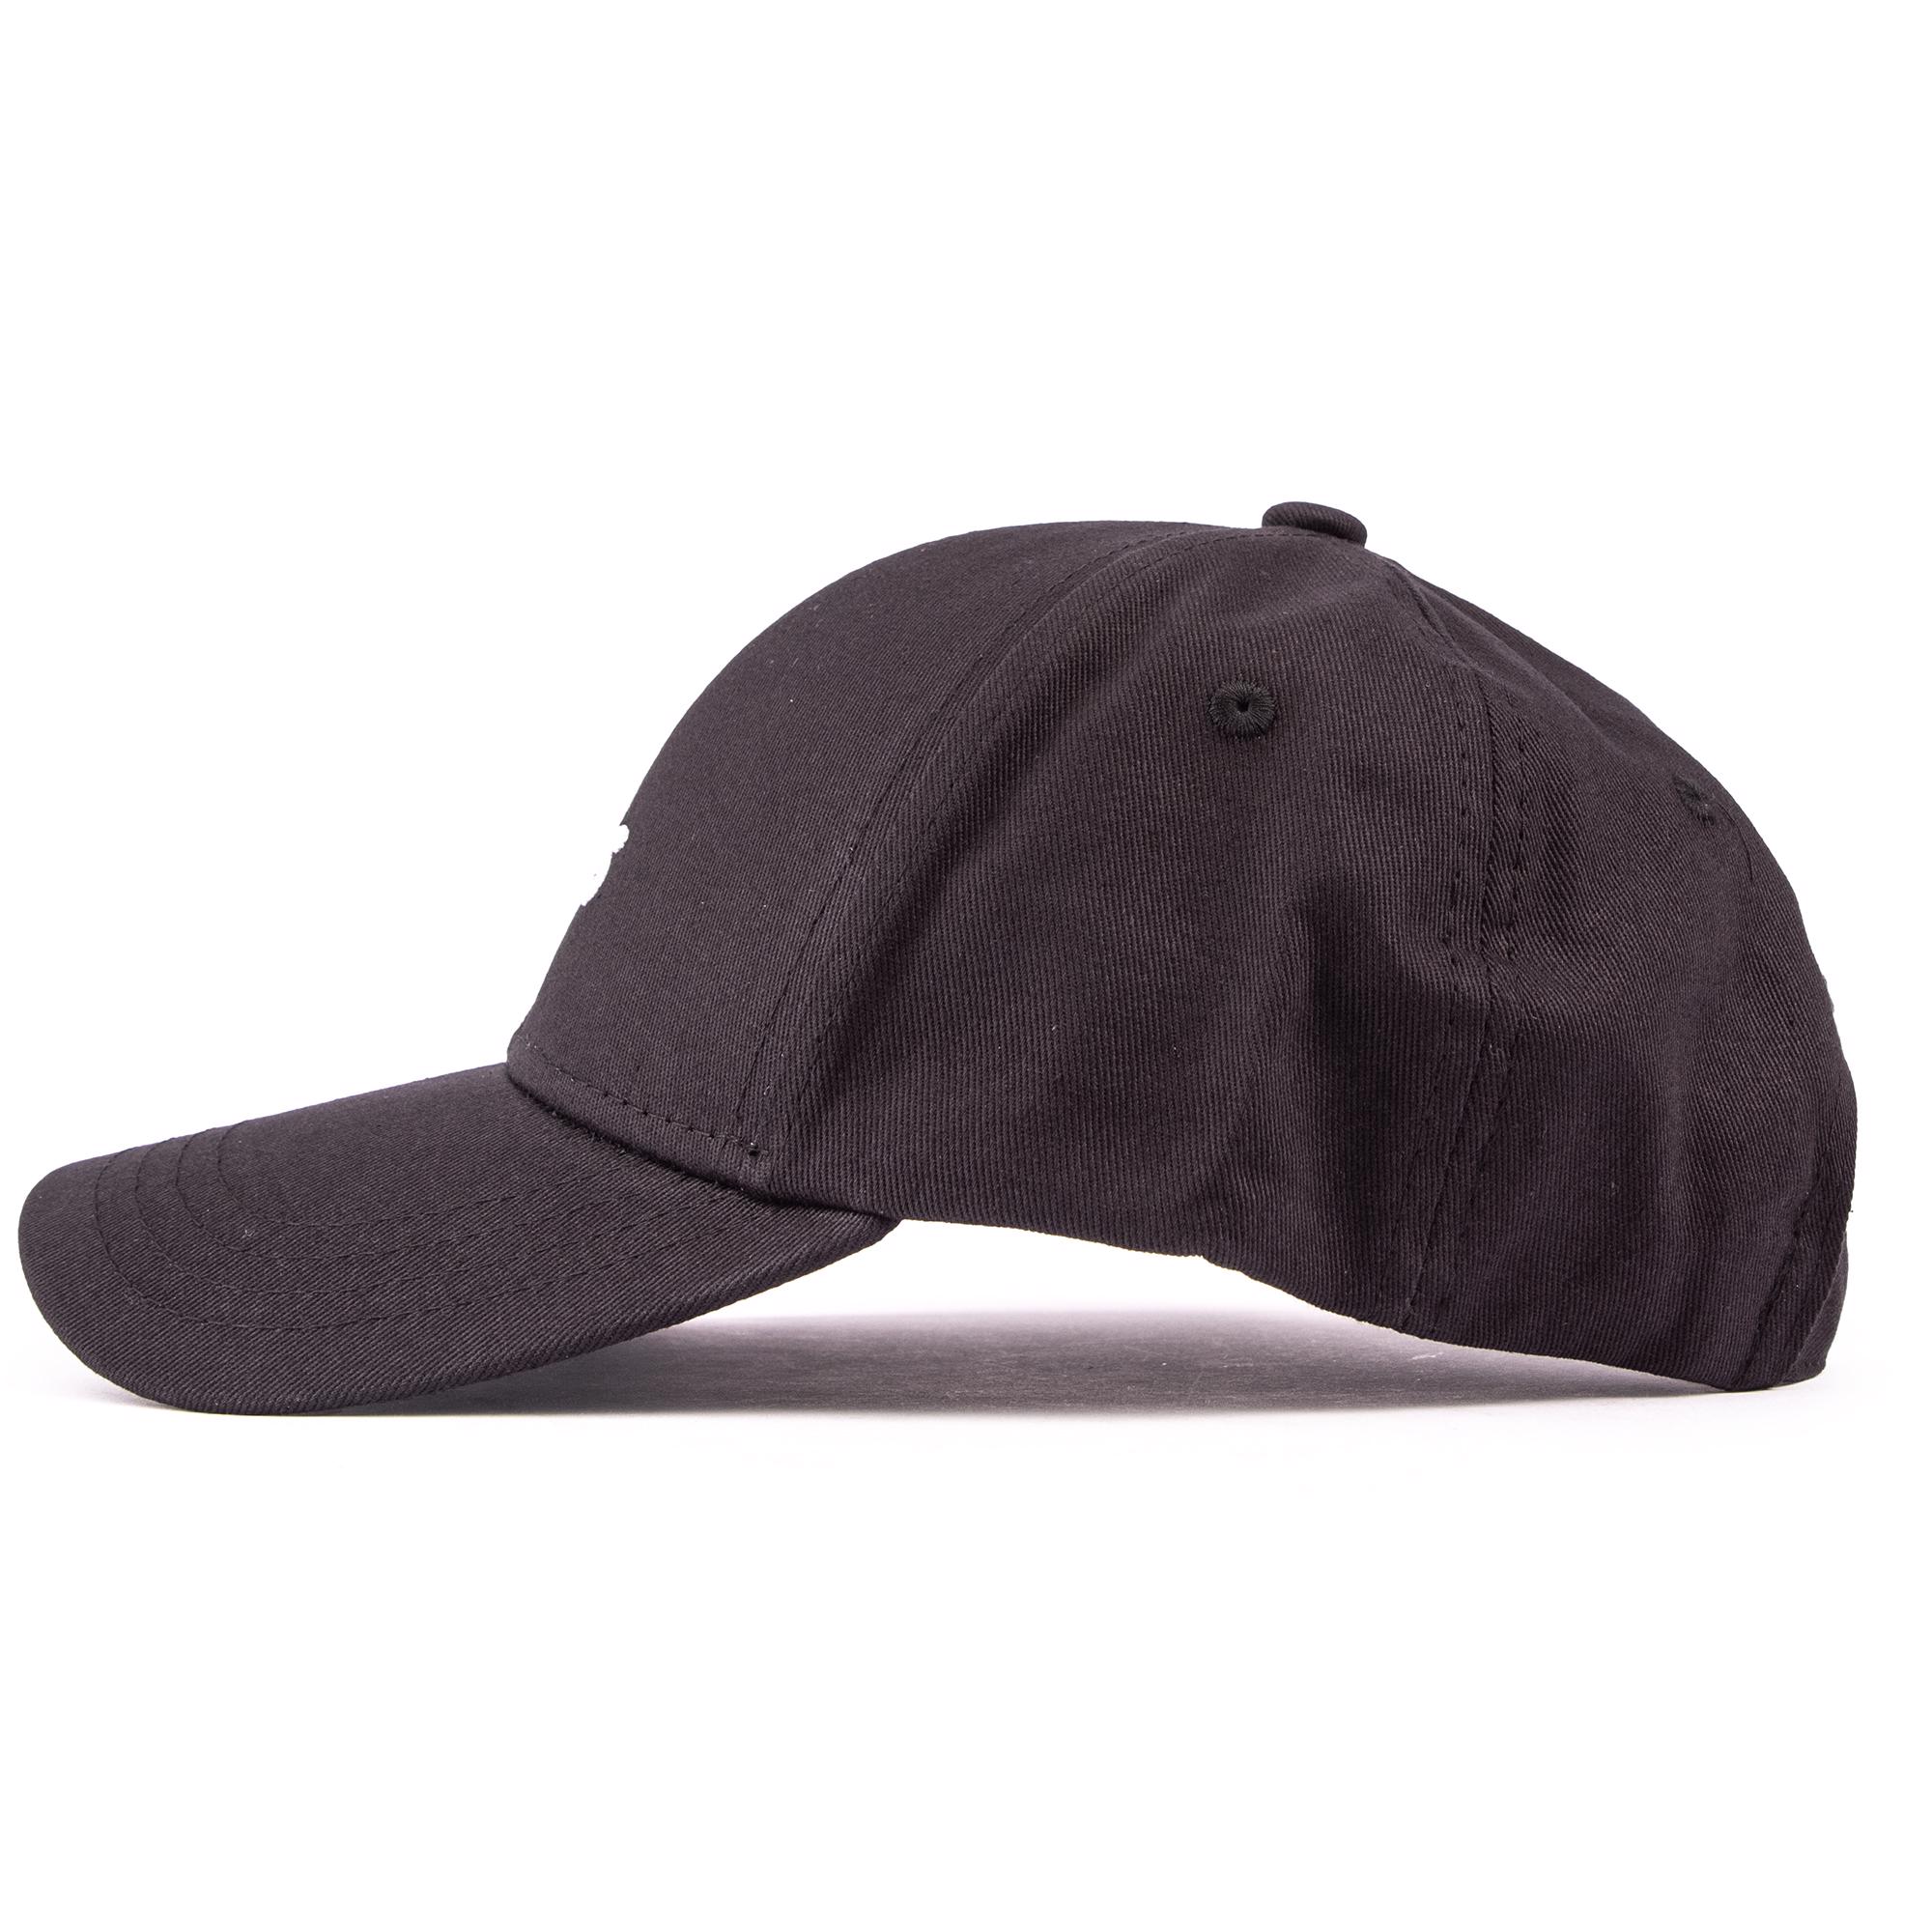 Black BOSS Hats Mens | Cap eBay Zed